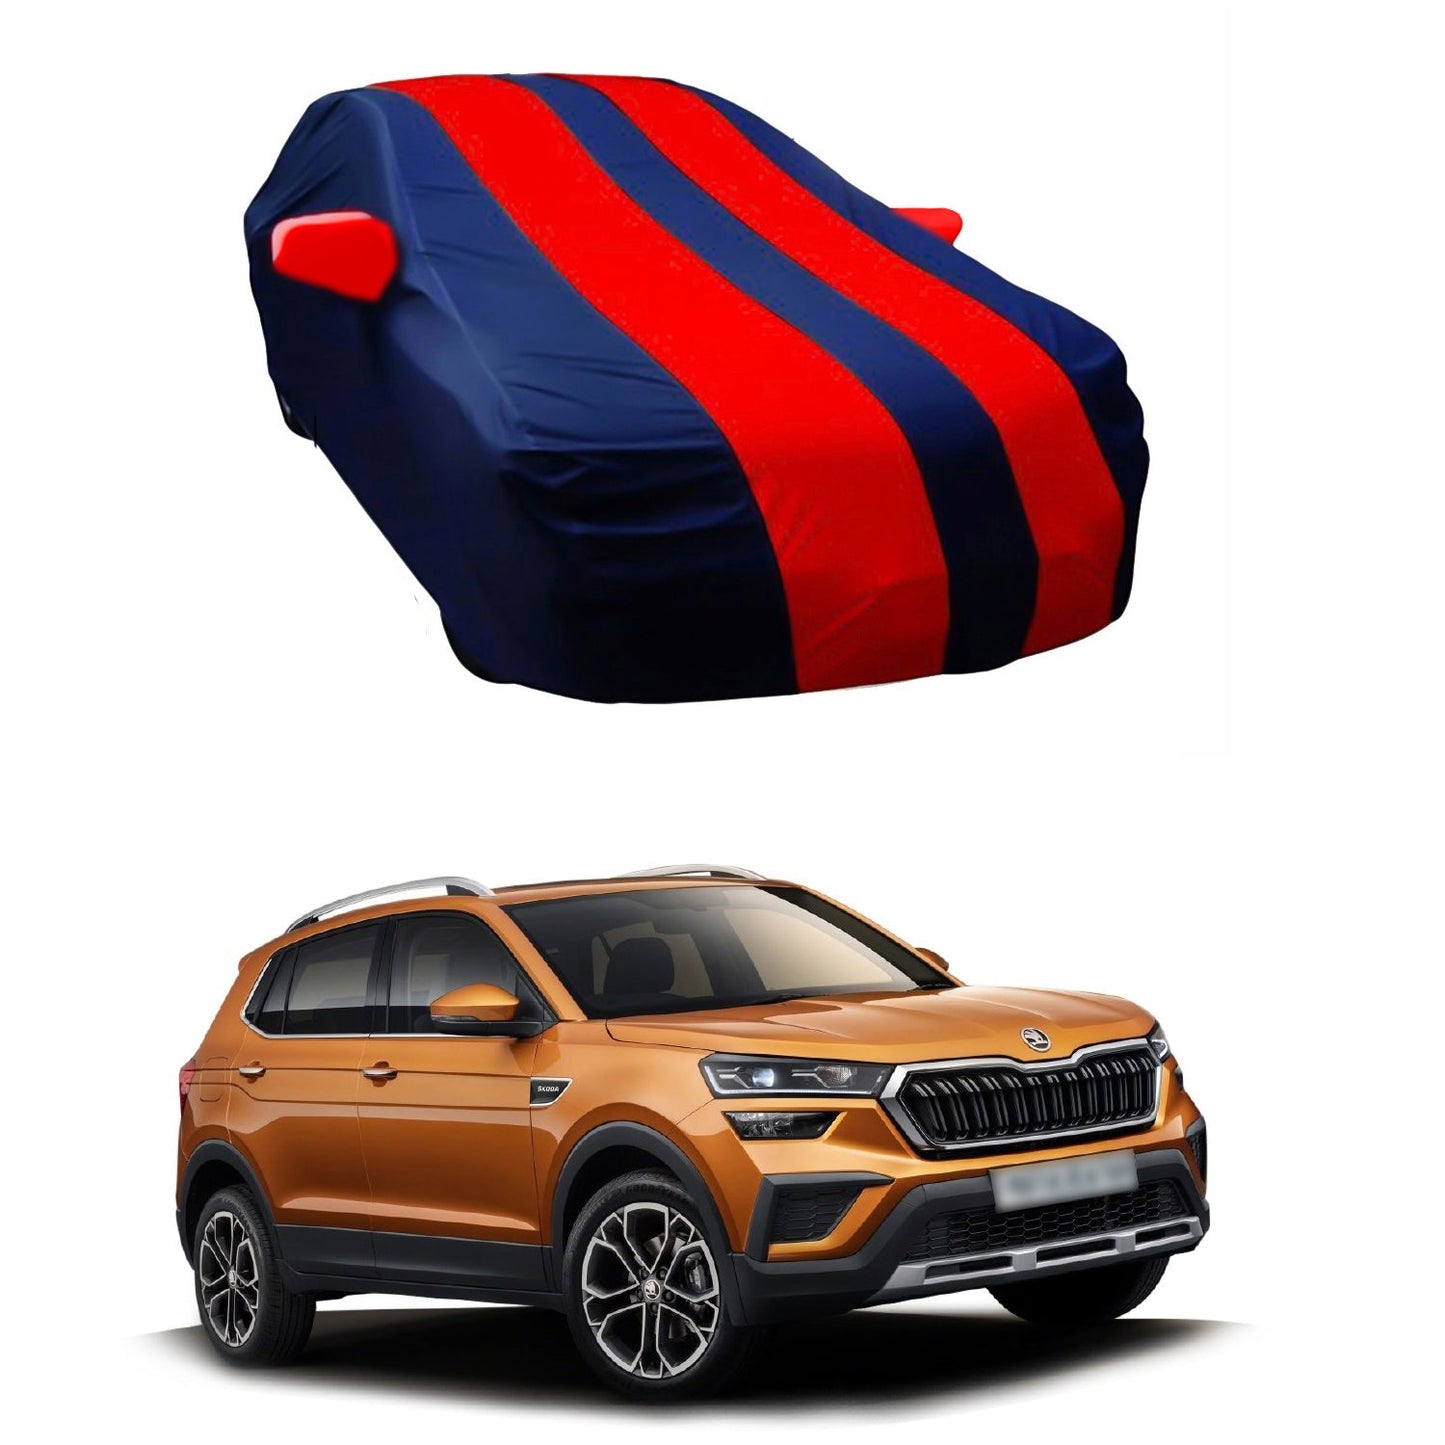 Oshotto Taffeta Car Body Cover with Mirror Pocket For Skoda Kushaq (Red, Blue)